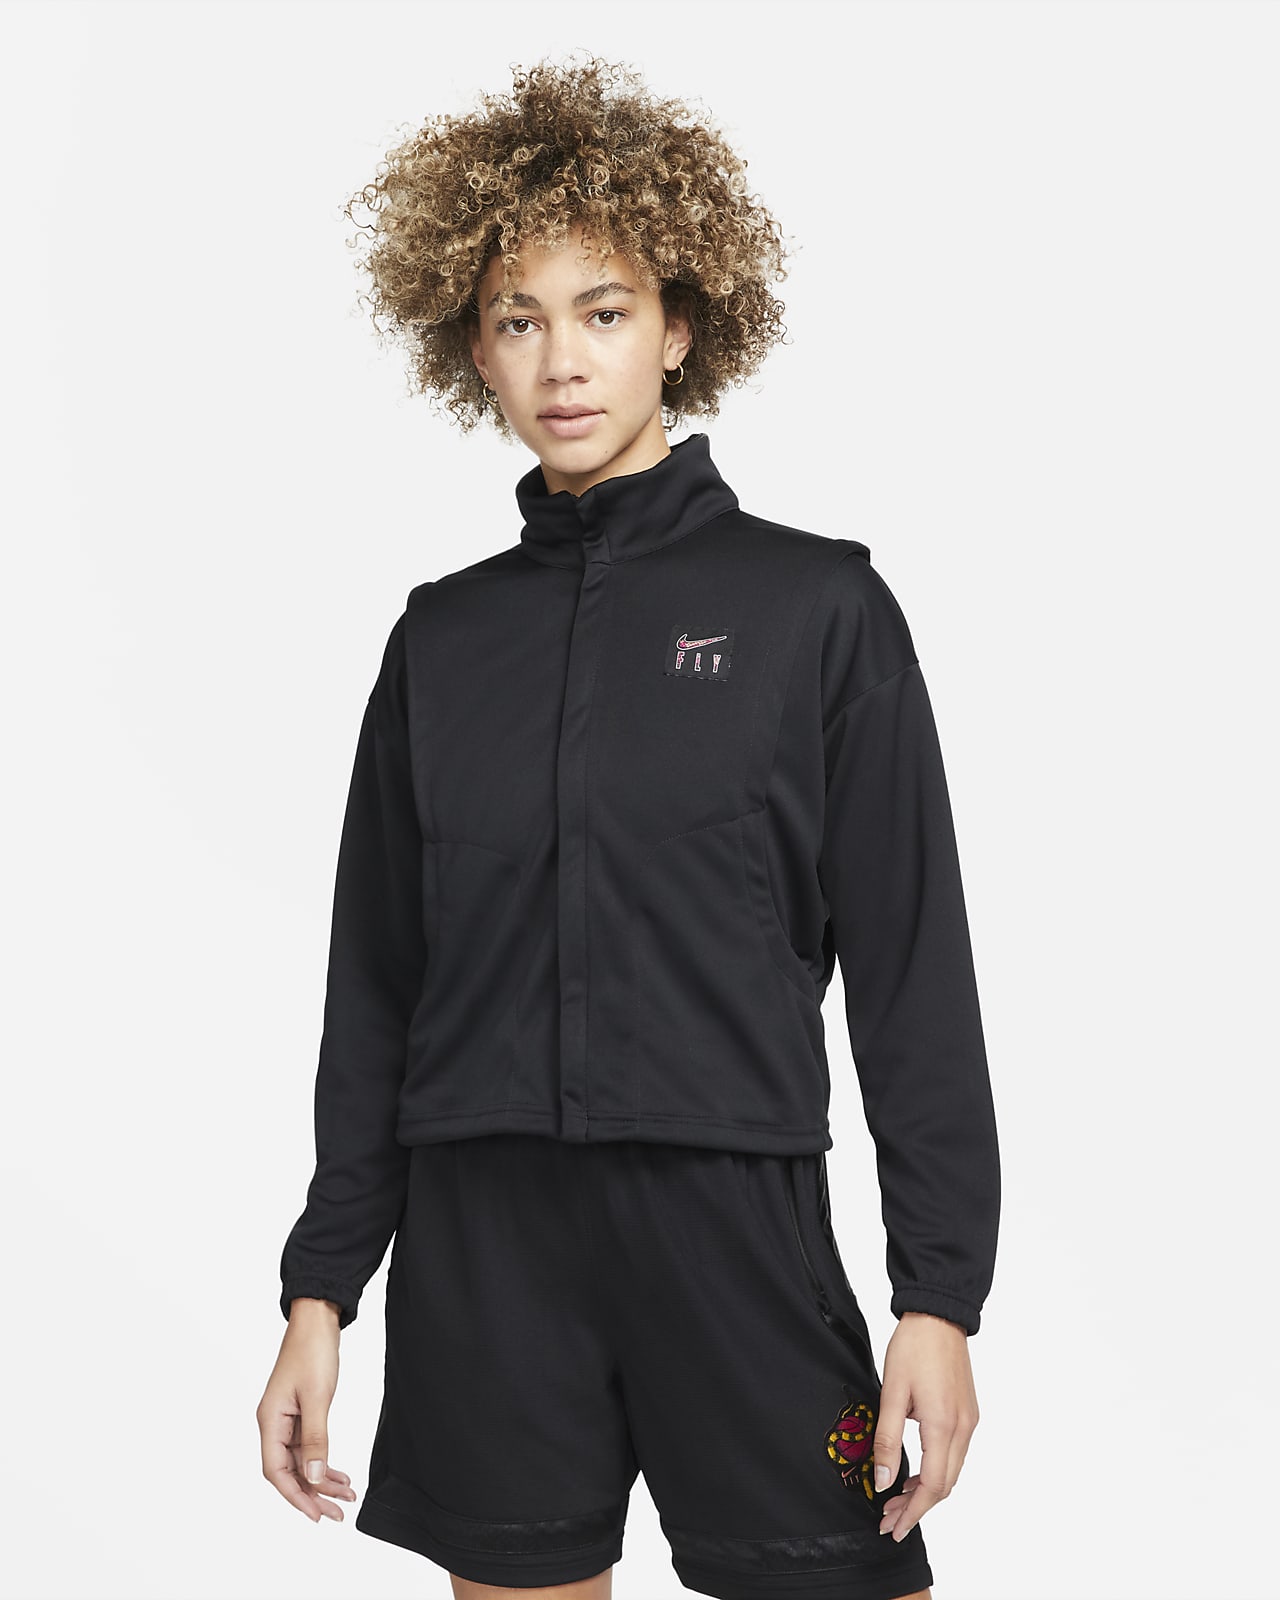 Nike Dri-FIT Retro Fly Women's Basketball Jacket